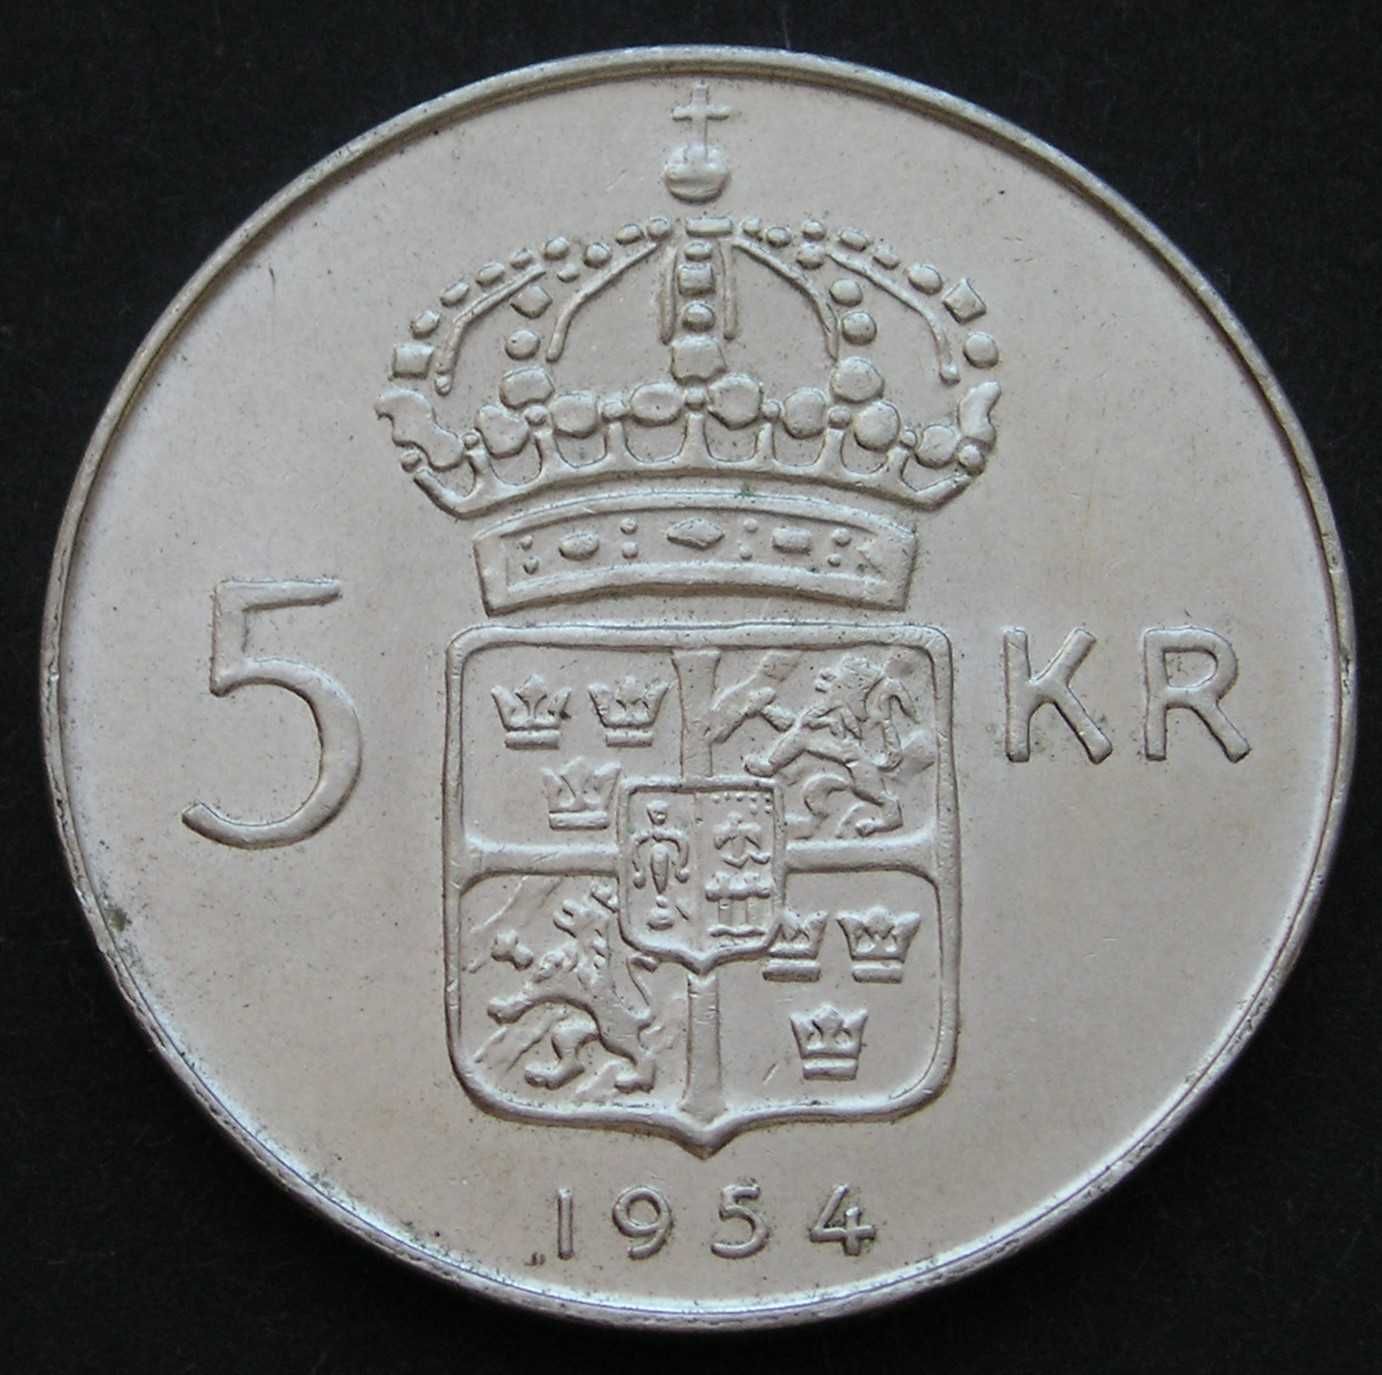 Szwecja 5 koron 1954 - Gustaw VI Adolf - srebro - stan 2